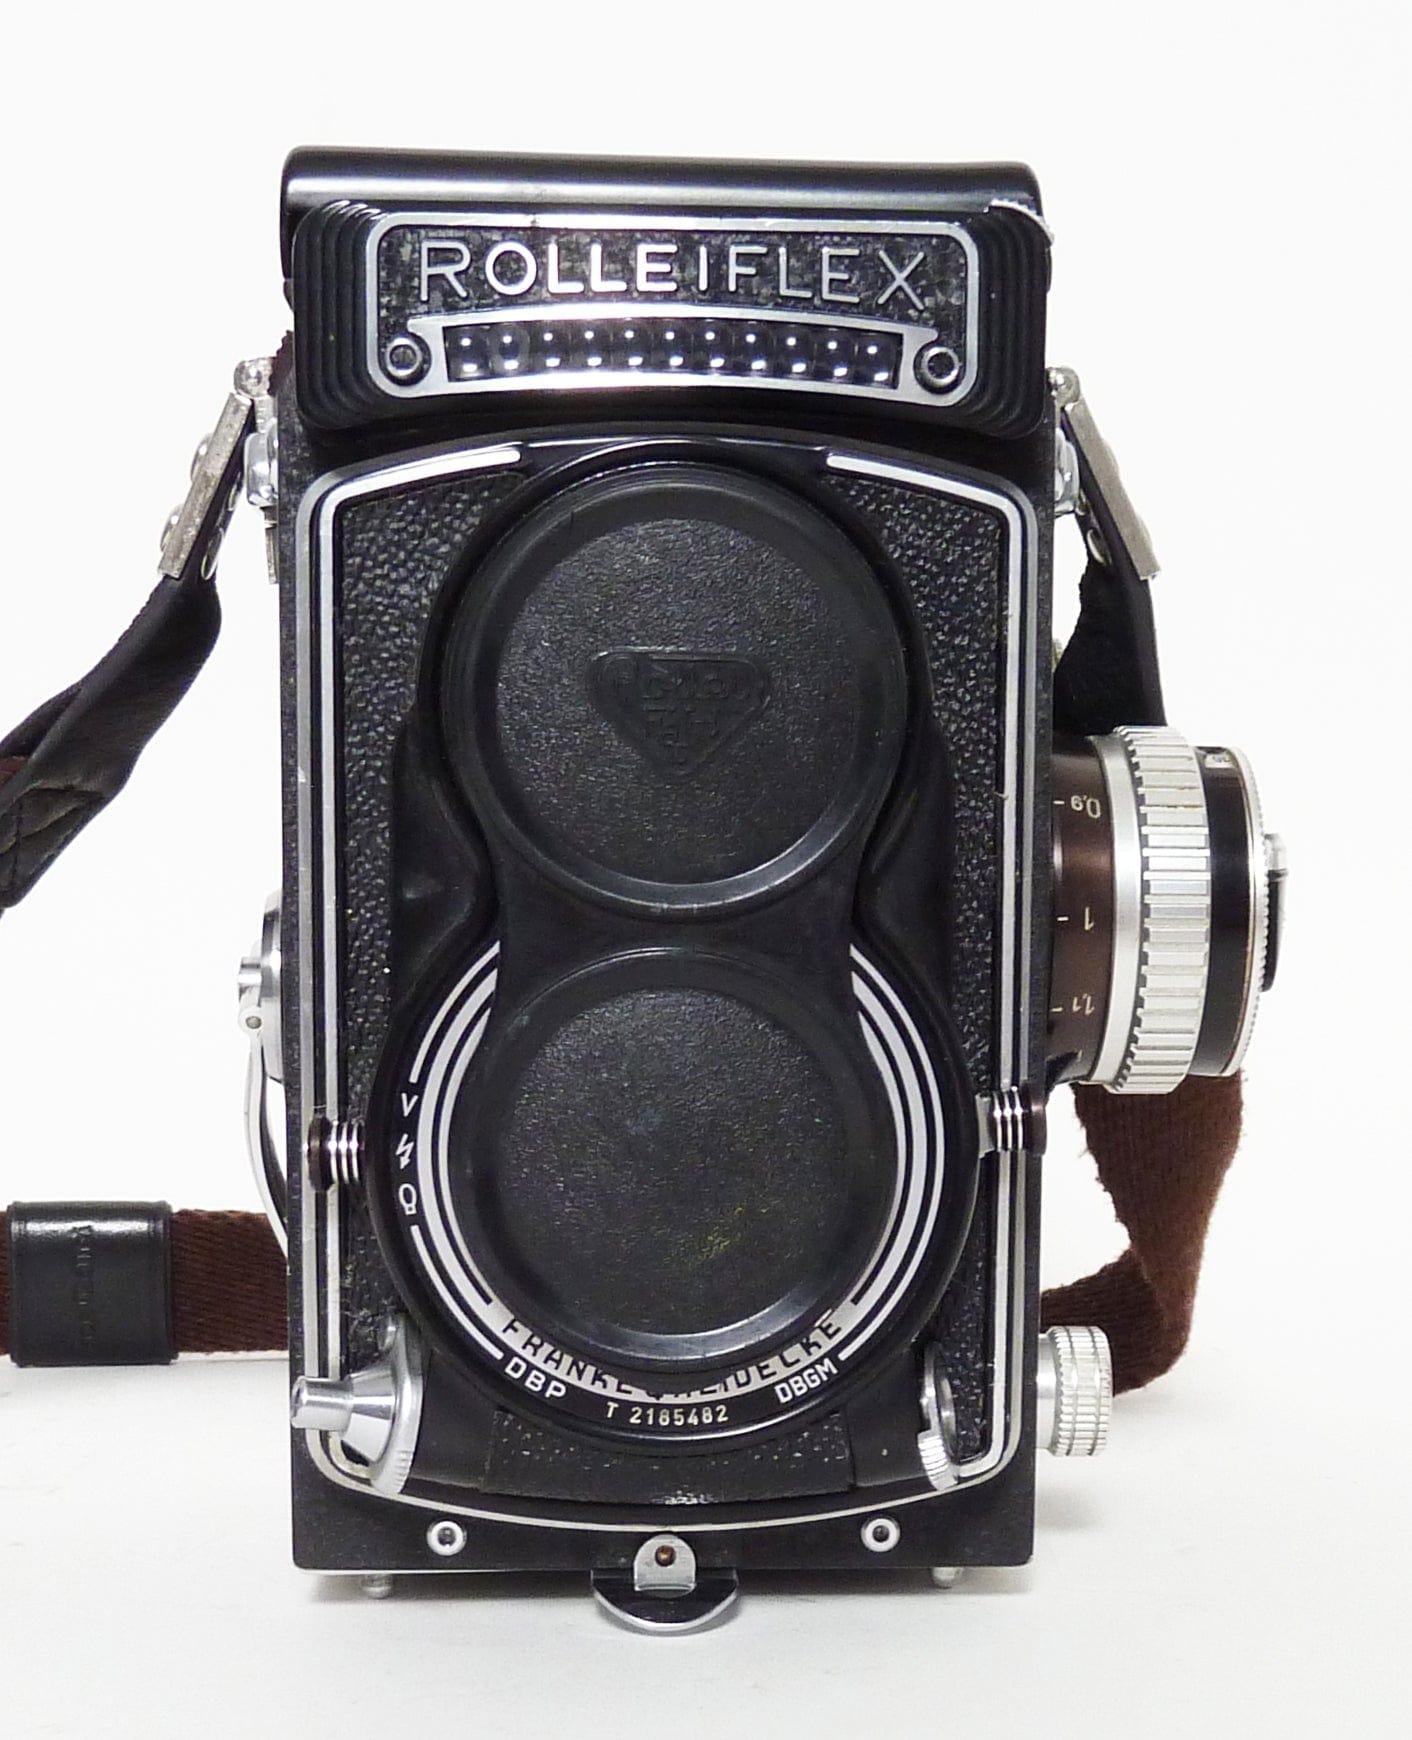 Rolleiflex T Model 2 with Tessar 75mm F3.5 Lens - Just CLA'd!